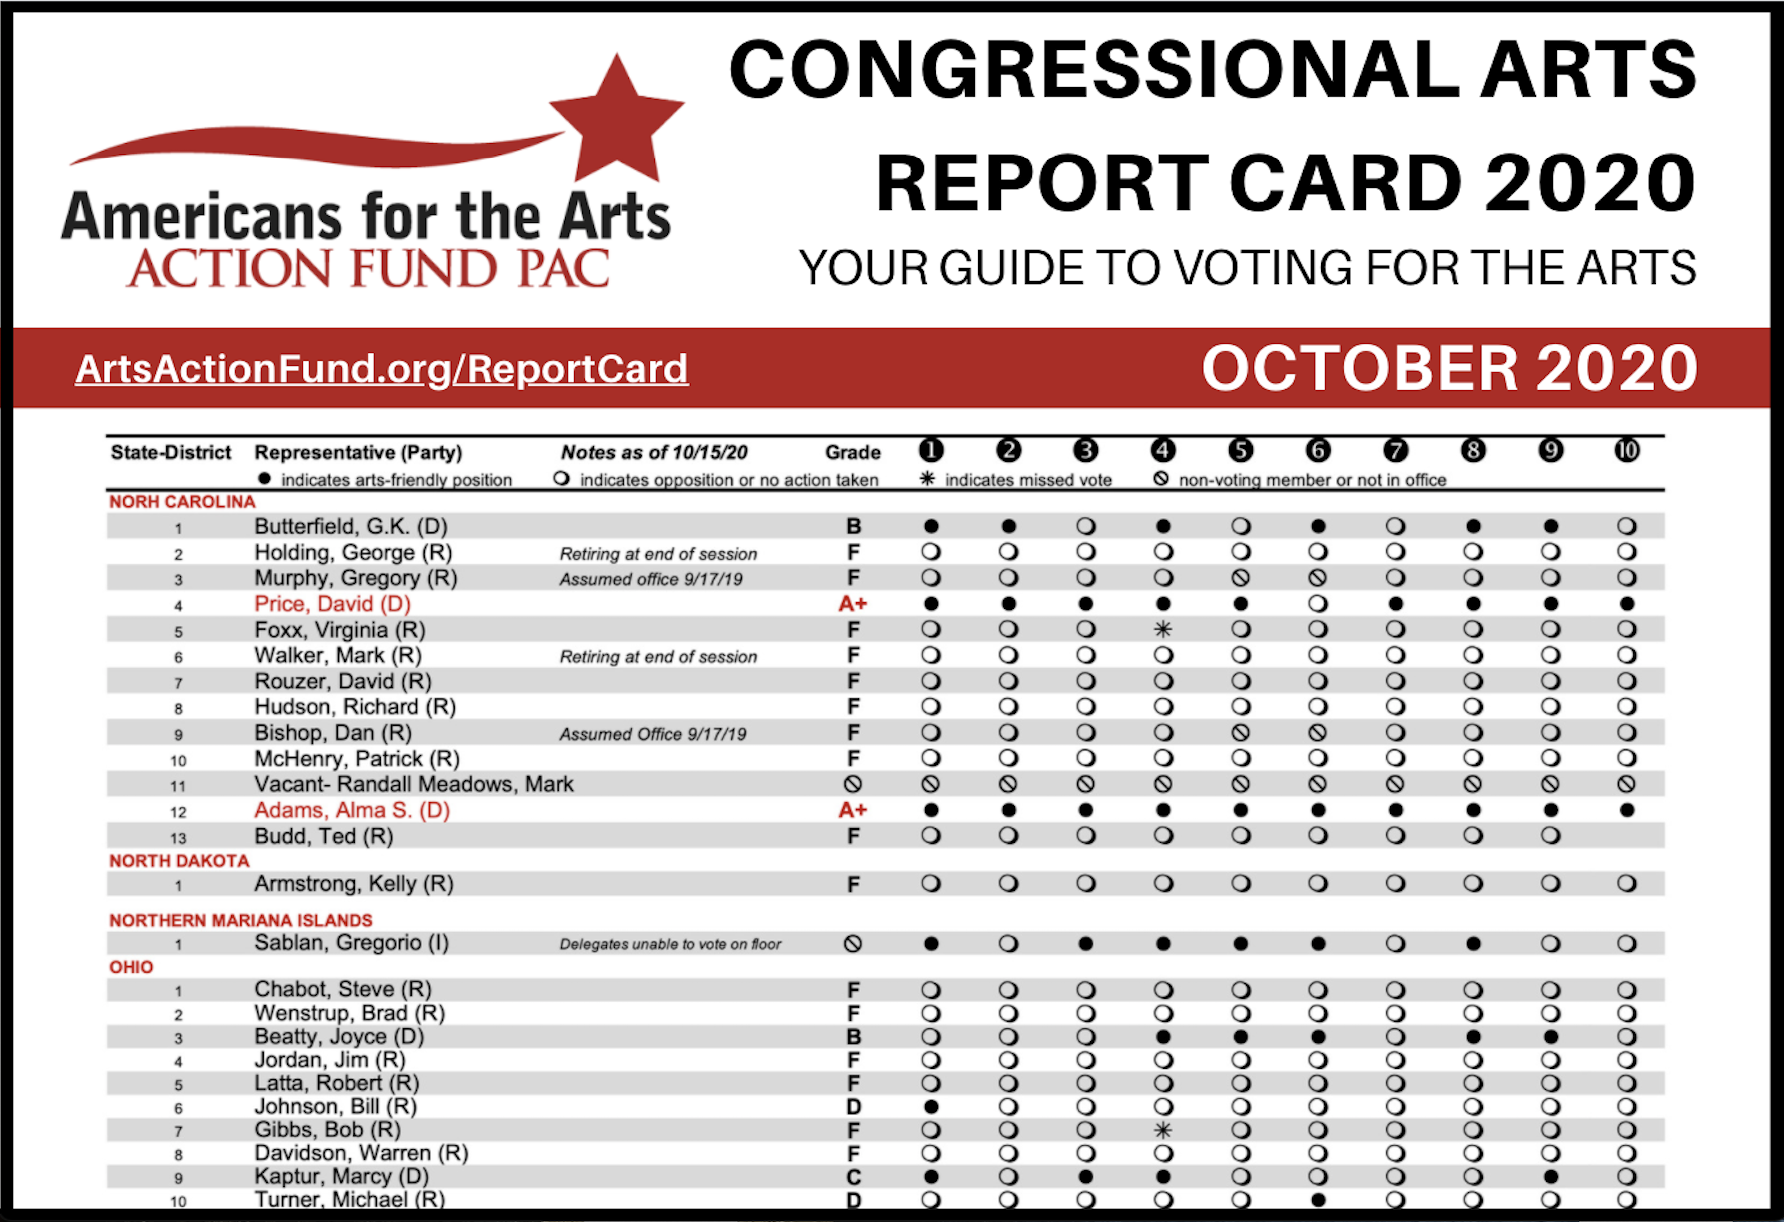 Congressional Arts Report Card